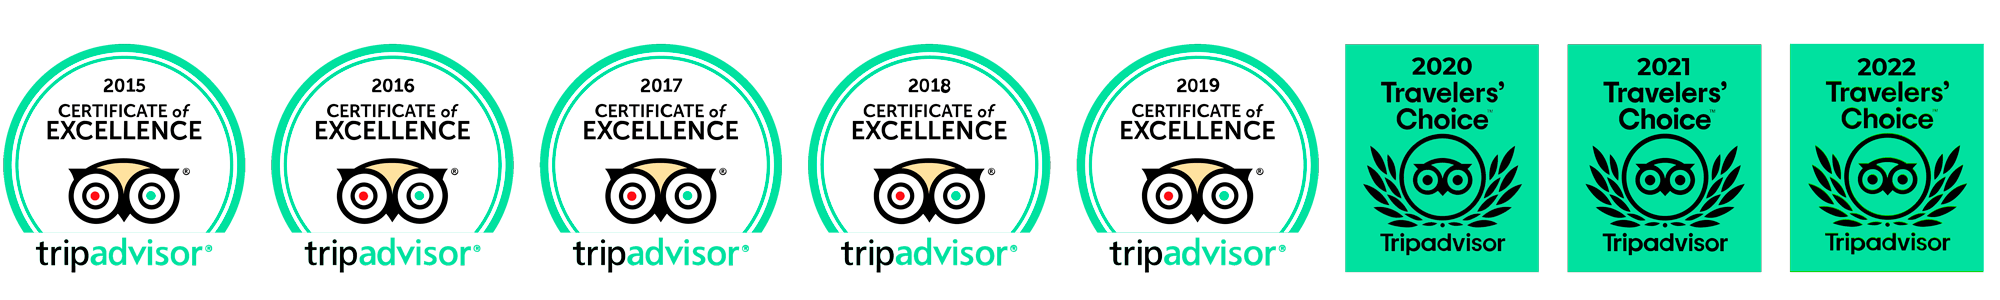 Quechuas-Expeditions-Awards-Tripadvisor-2022-travelers-choise-1